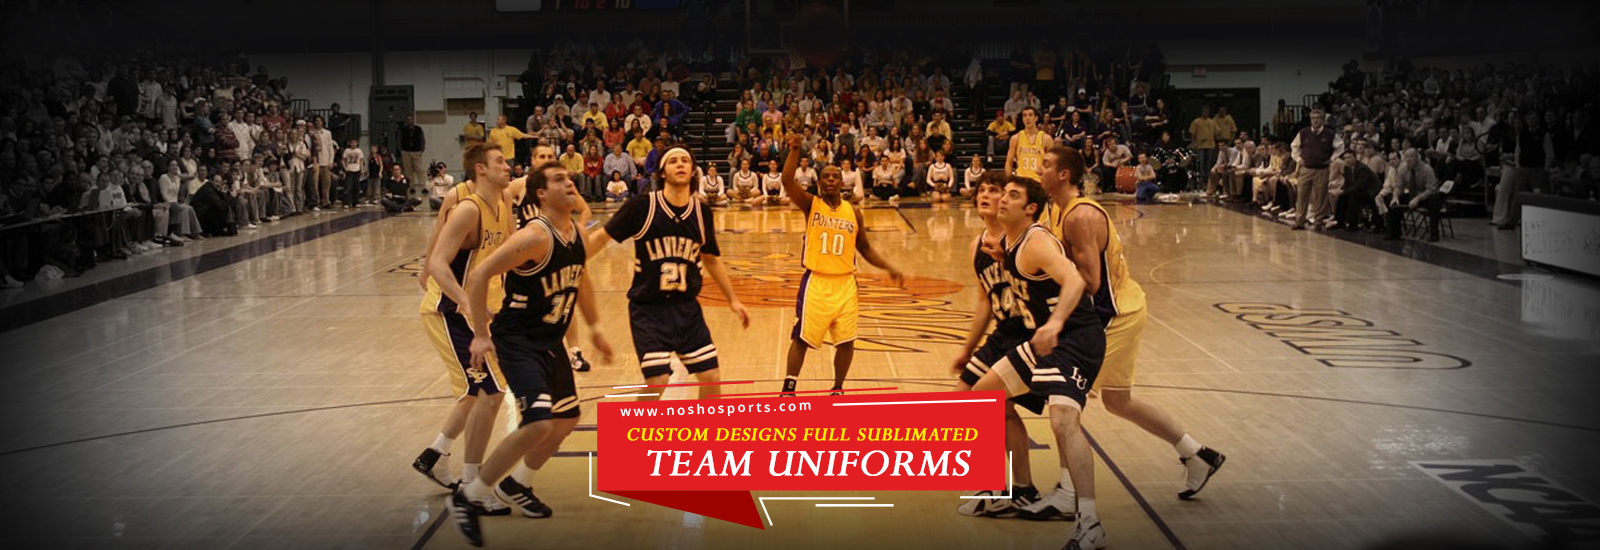 Team Uniforms